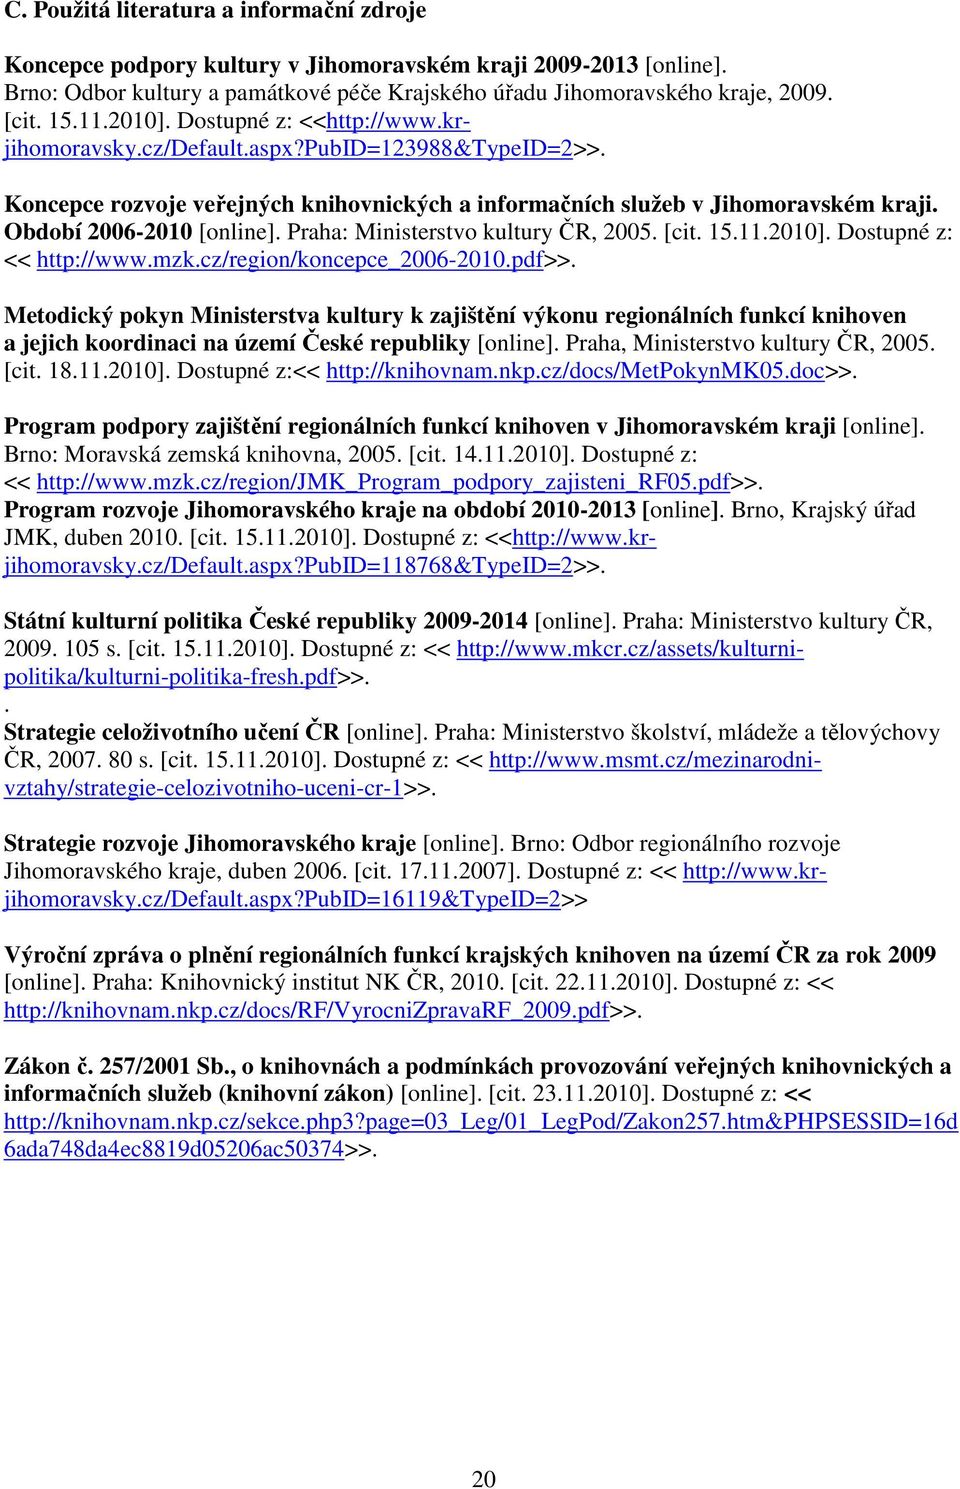 Období 2006-2010 [online]. Praha: Ministerstvo kultury ČR, 2005. [cit. 15.11.2010]. Dostupné z: << http://www.mzk.cz/region/koncepce_2006-2010.pdf>>.